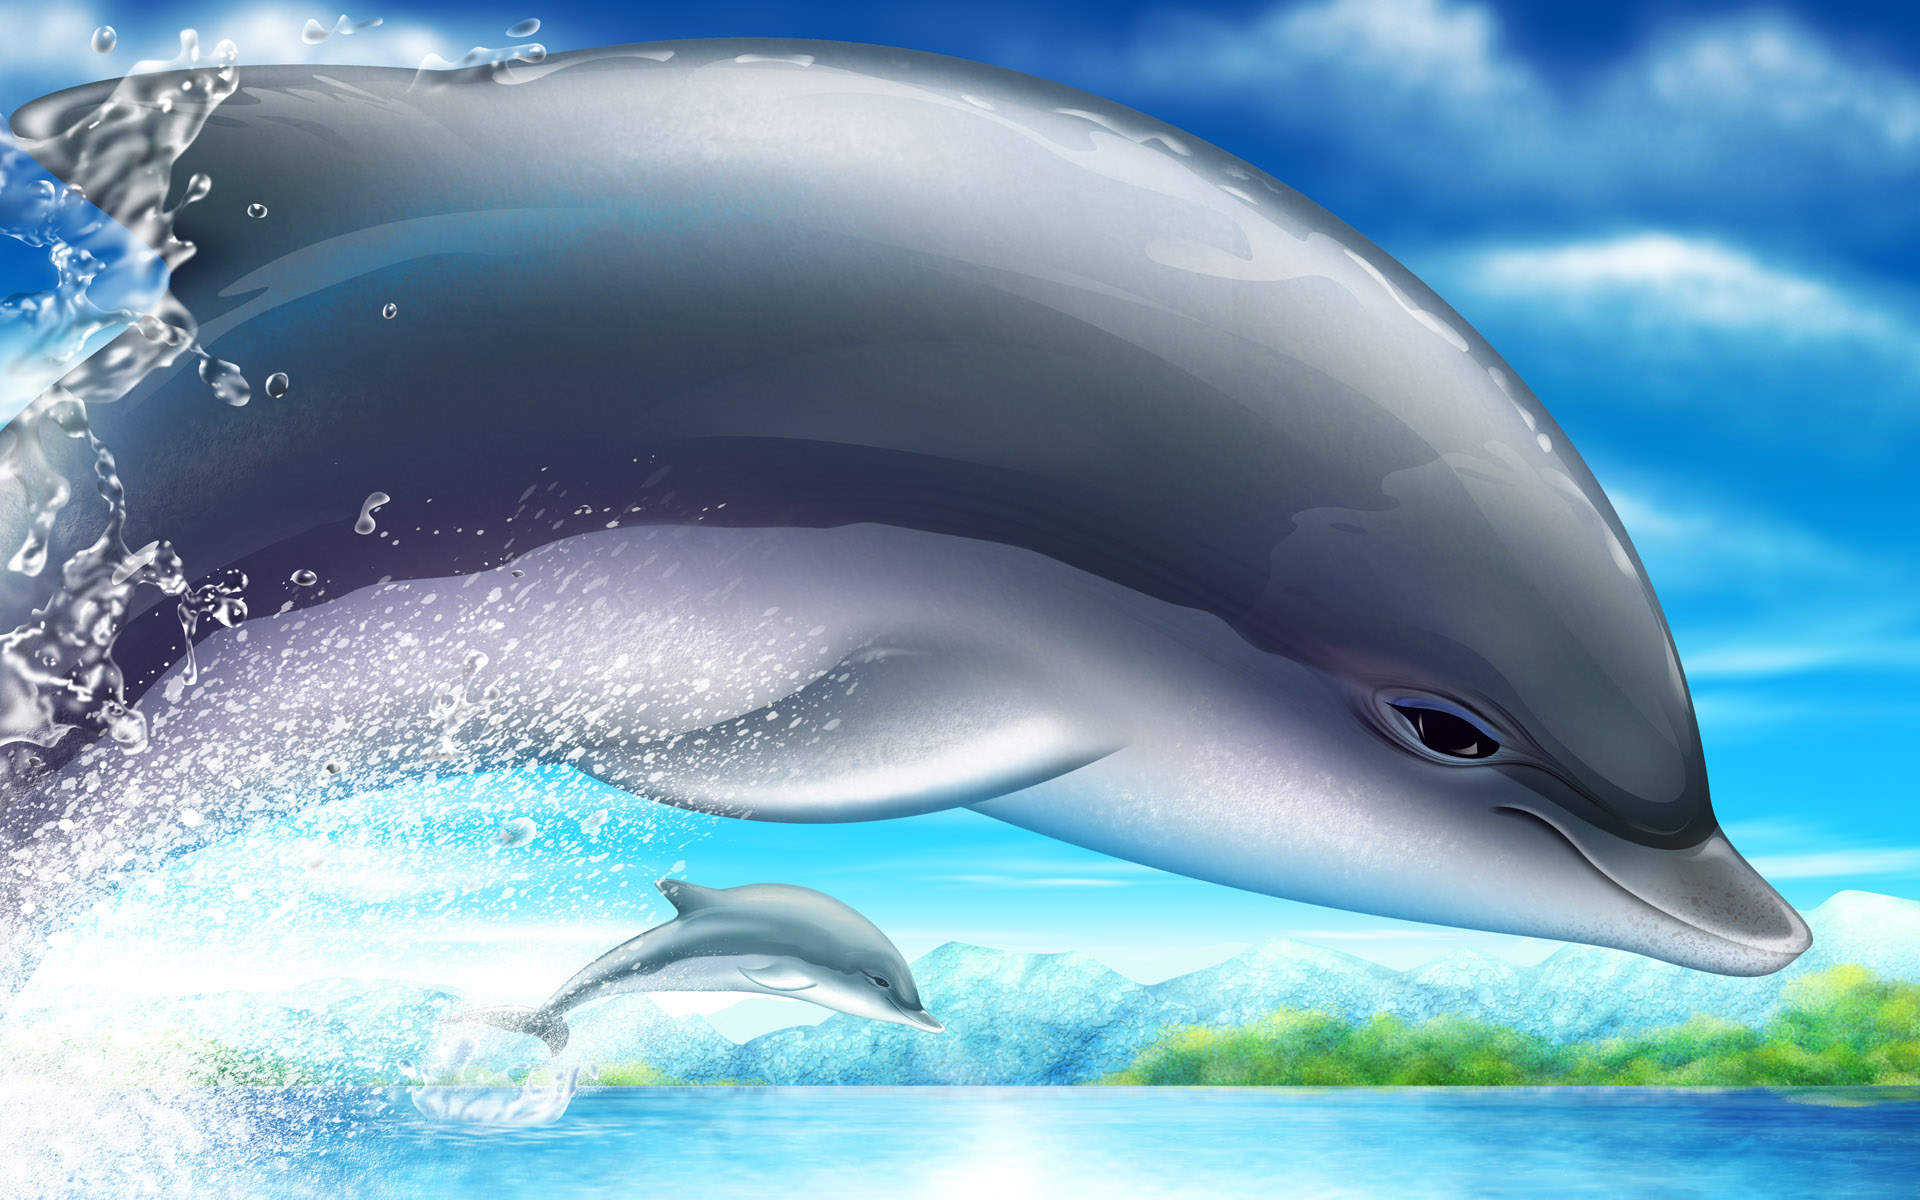  wallpaper Animated Dolphin Wallpaper hd wallpaper background desktop